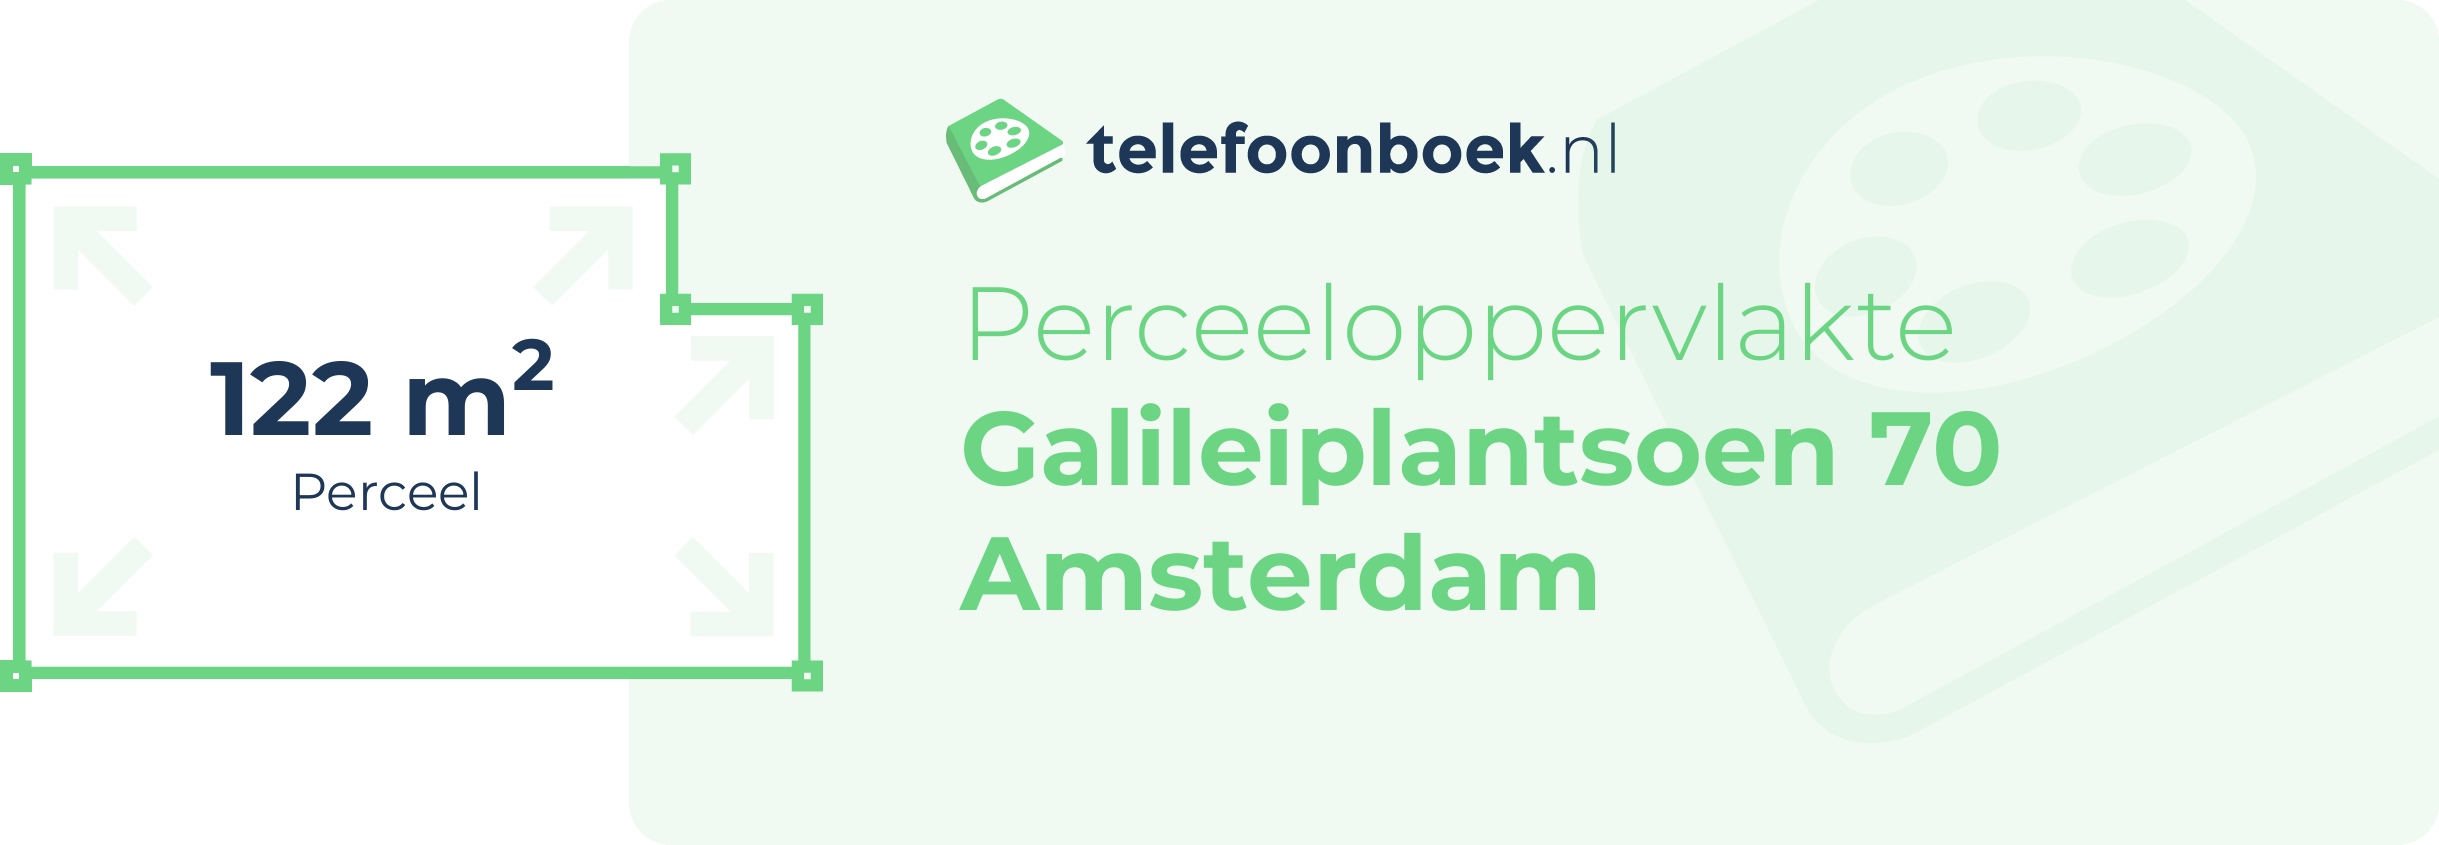 Perceeloppervlakte Galileiplantsoen 70 Amsterdam